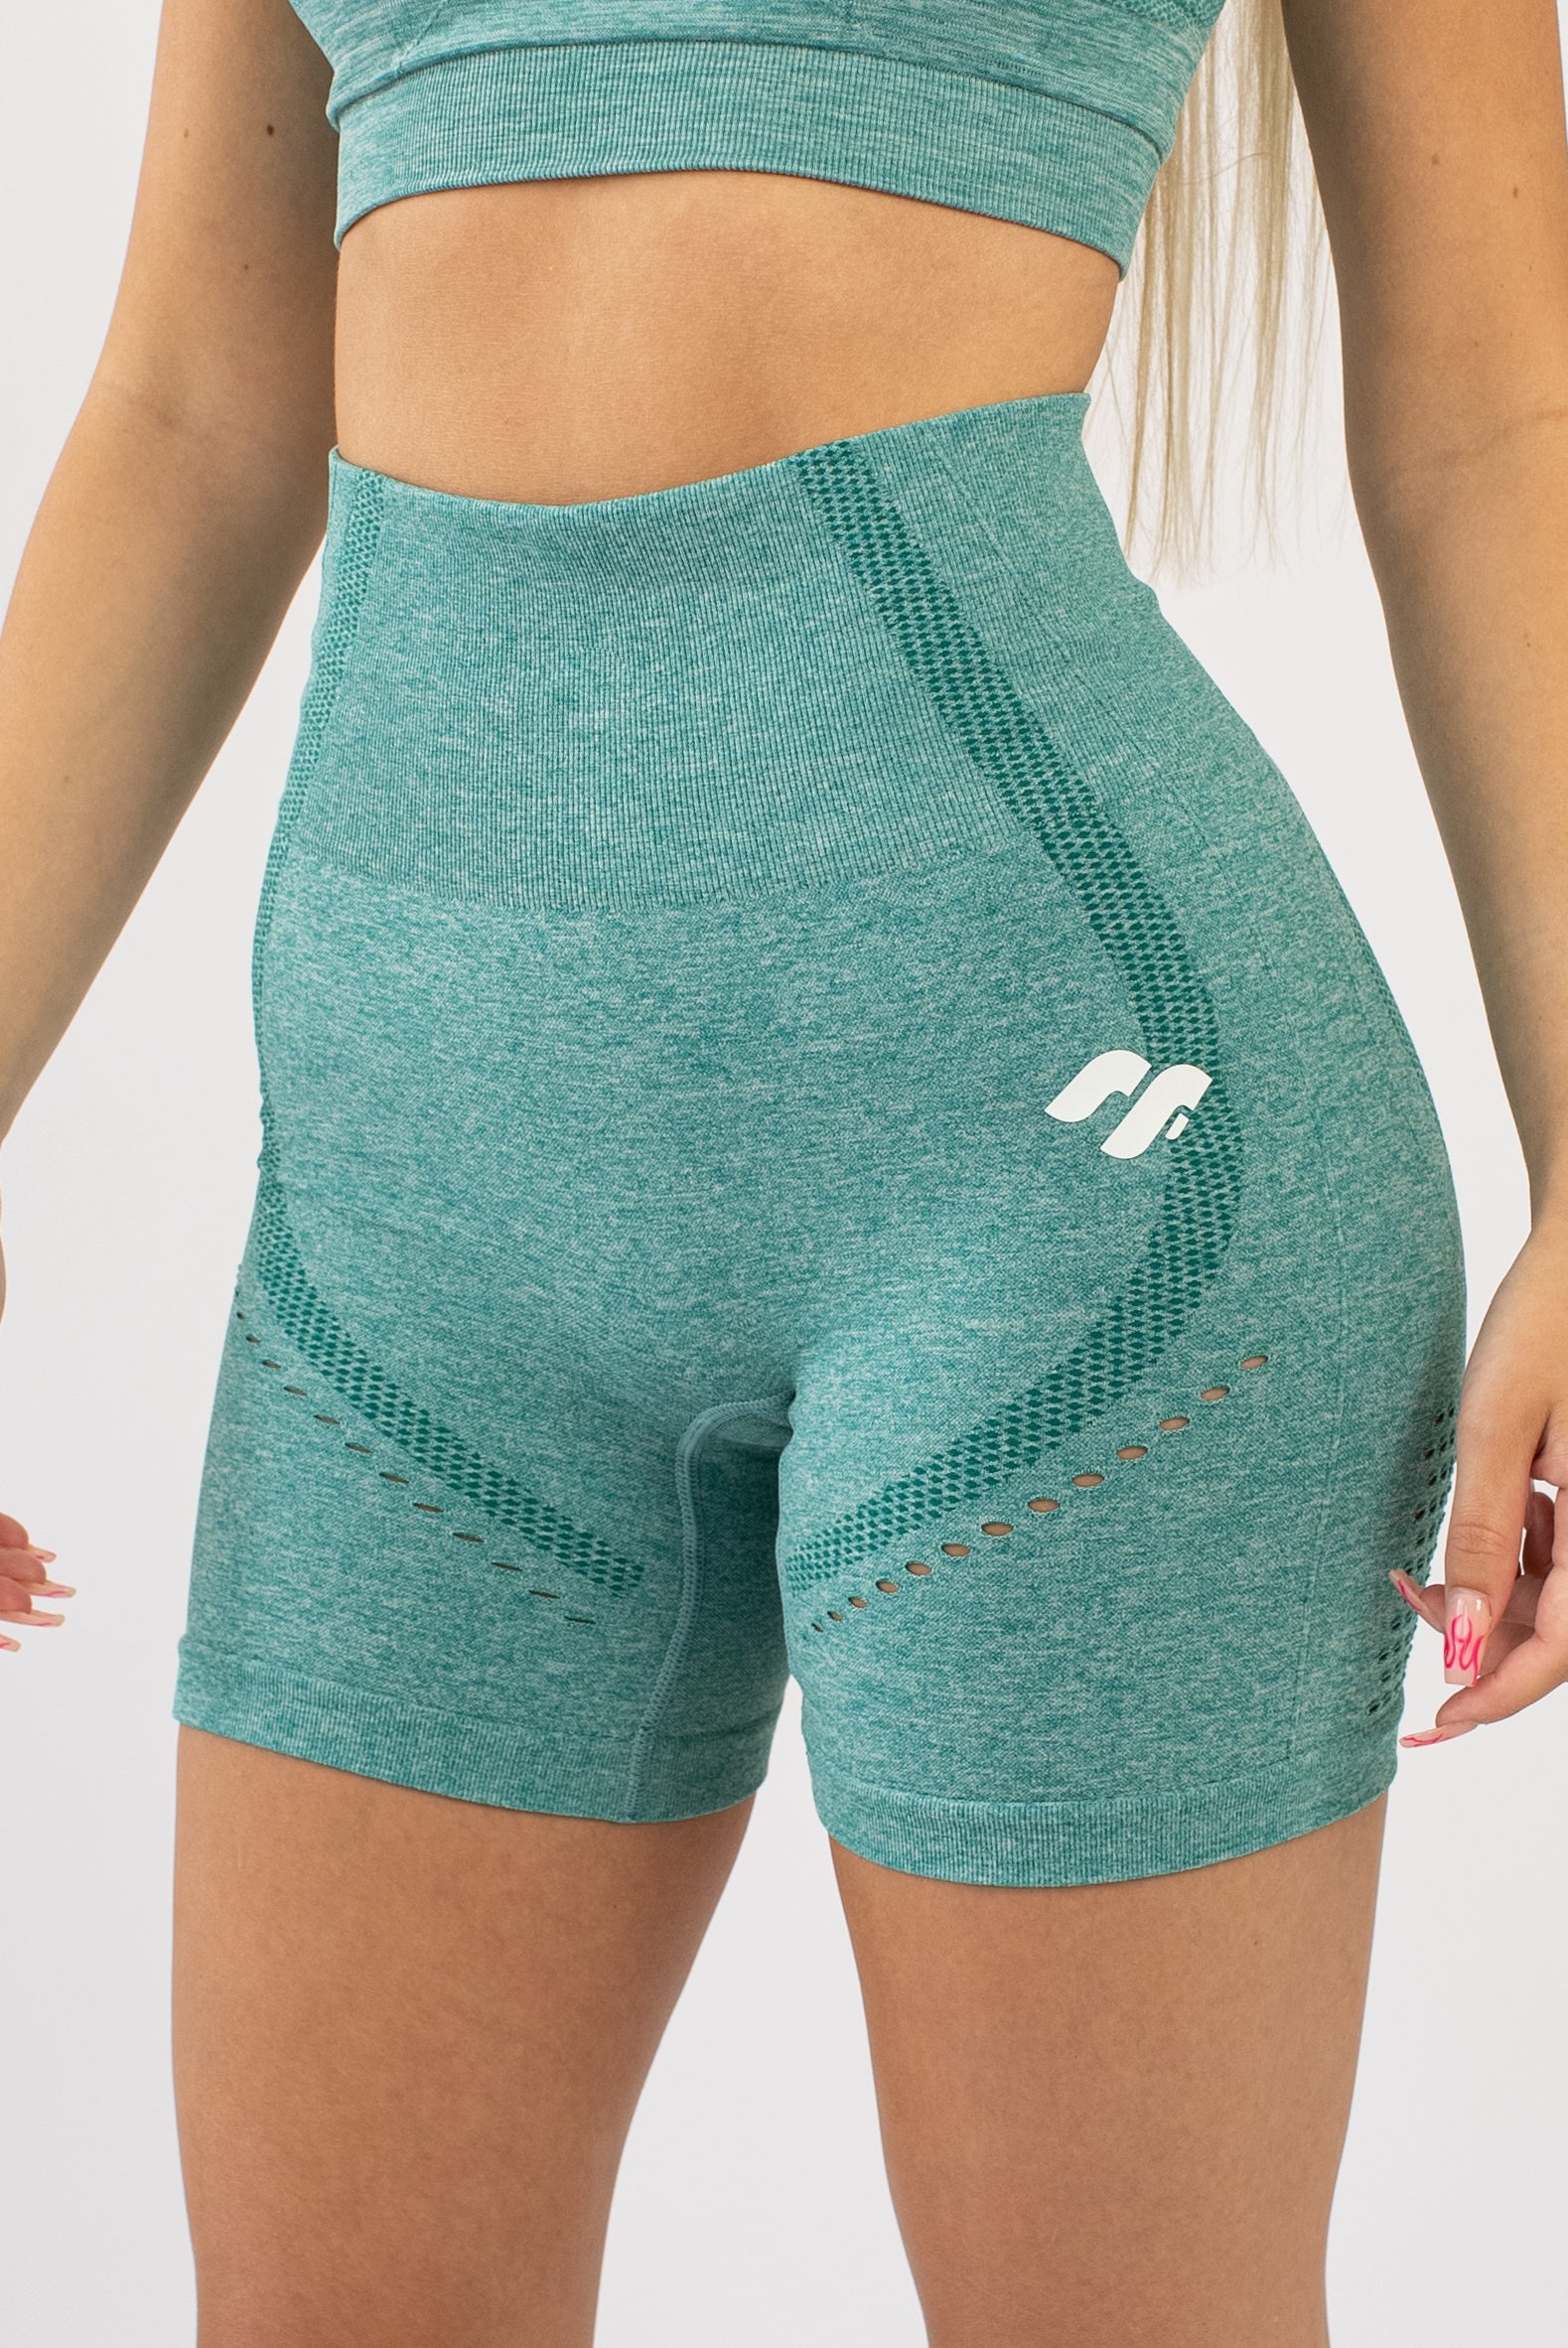 AirFlex Seamless Shorts - Green, Ladies Fitness Shorts